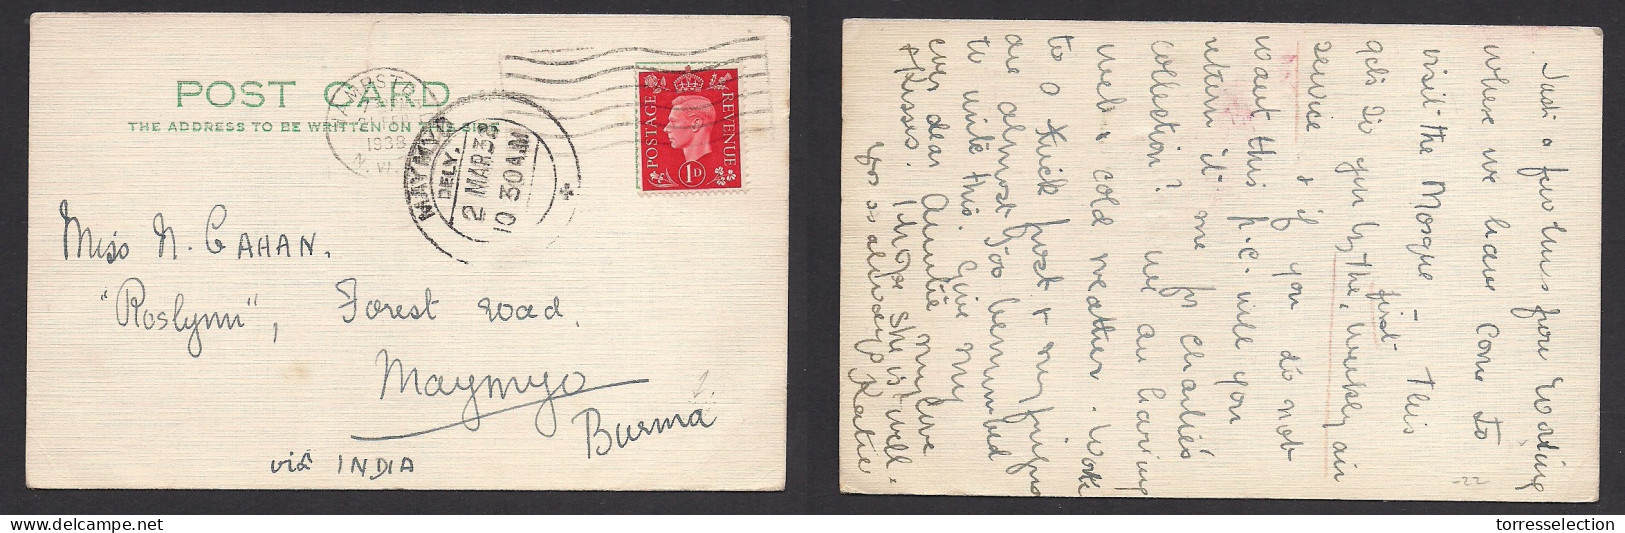 Great Britain - XX. 1938 (21 Febr) Hampstead - Burma, MayMyo (2 March) Via India. 1d Red Private Comercial Fkd Card. XSA - ...-1840 Prephilately